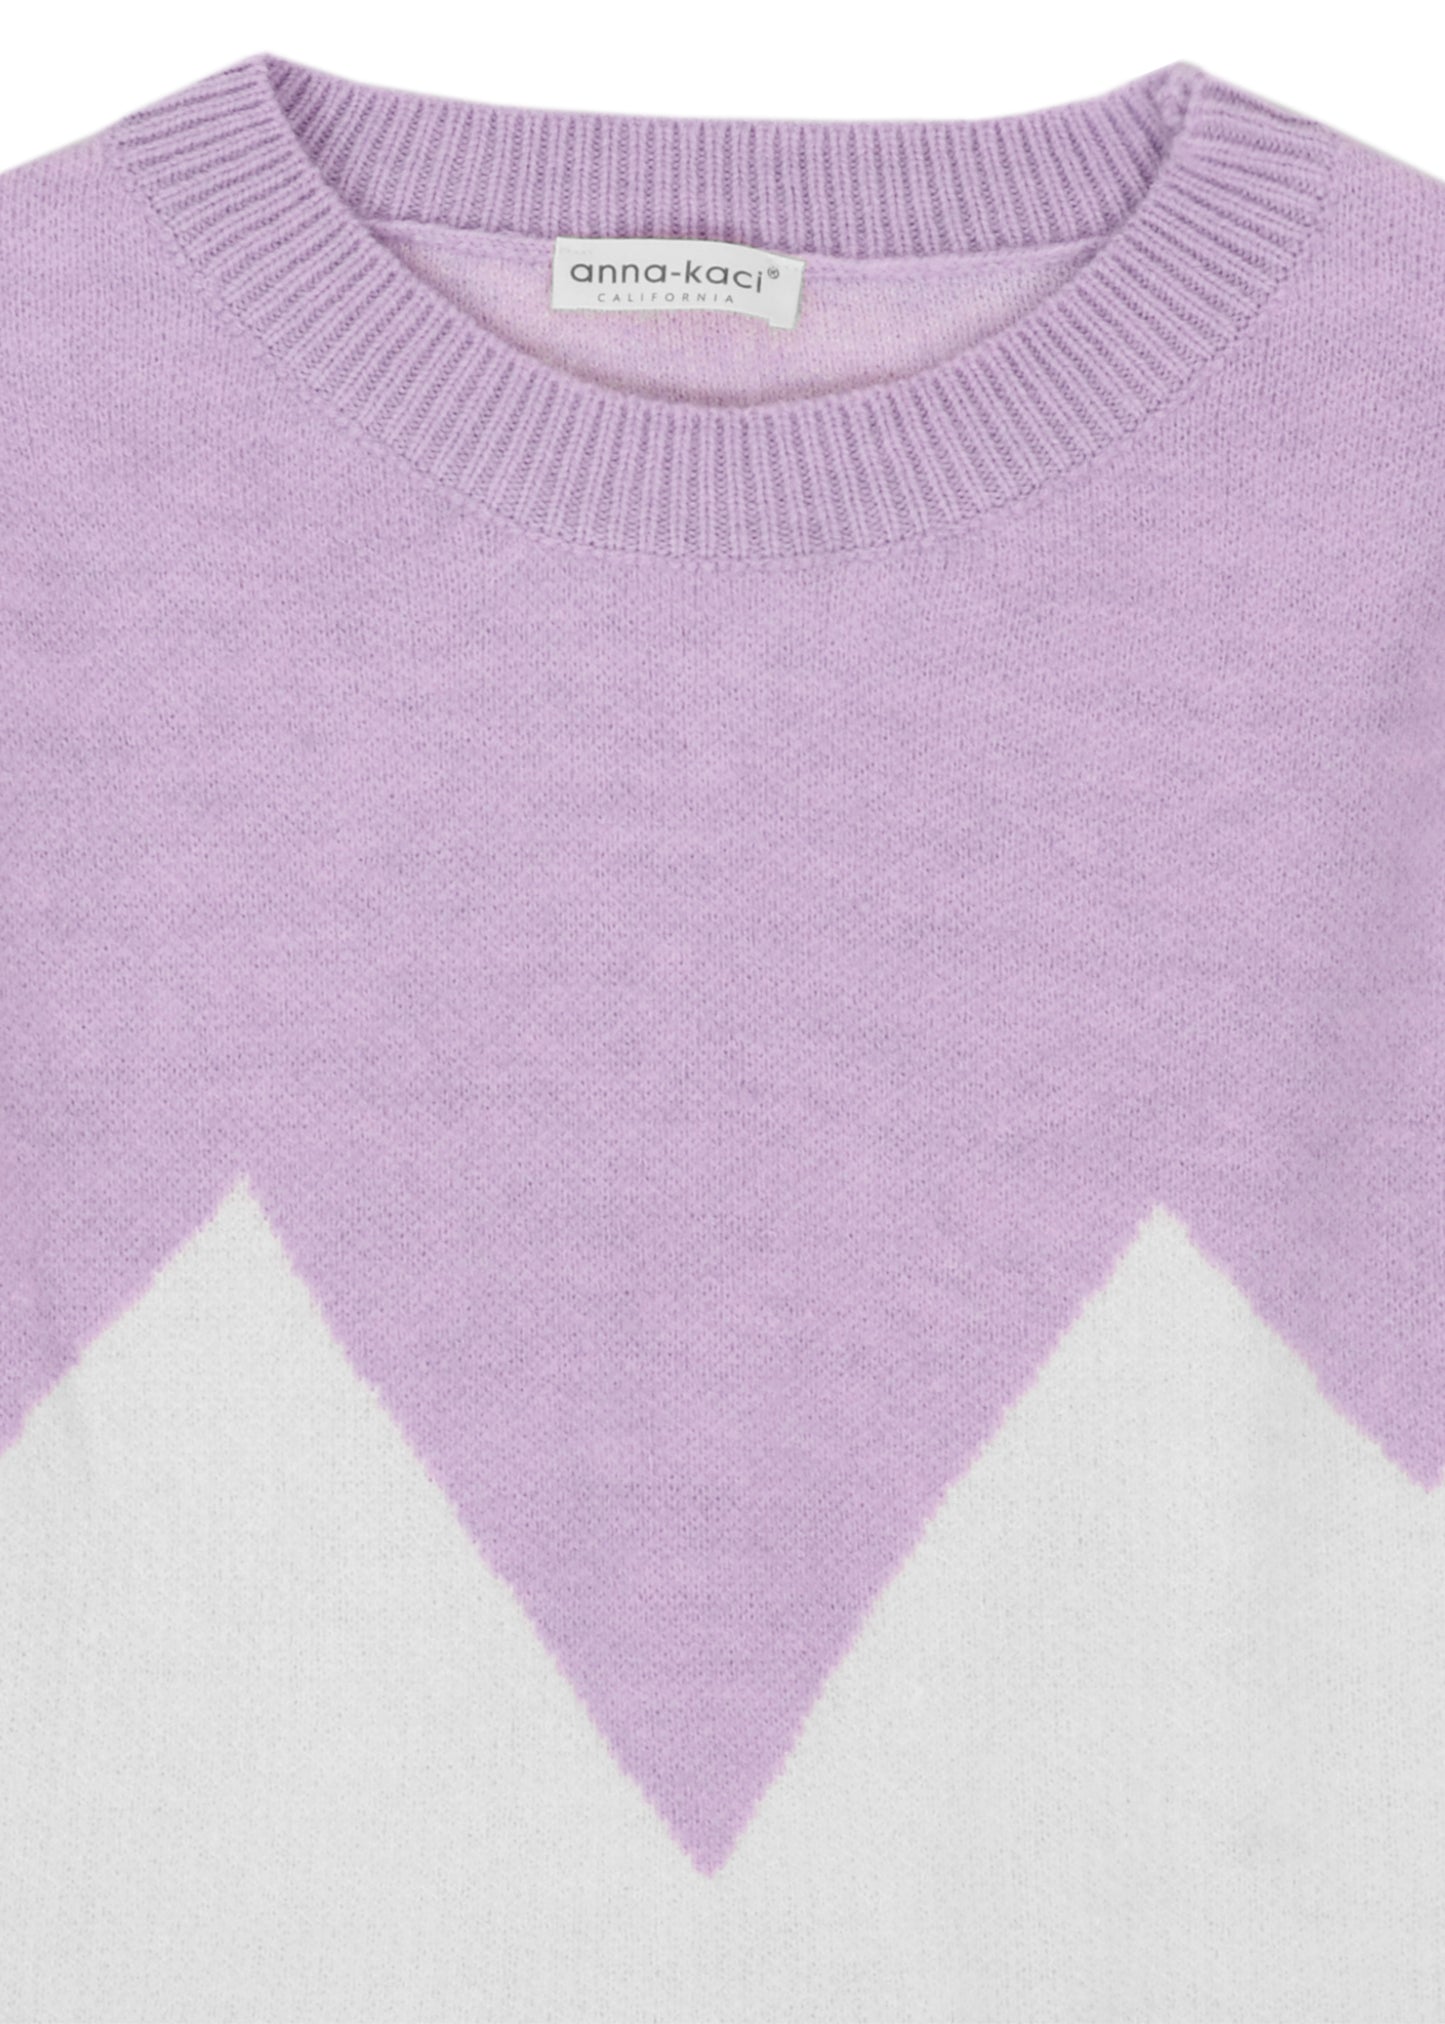 Drop Shoulder Color Block Sweater